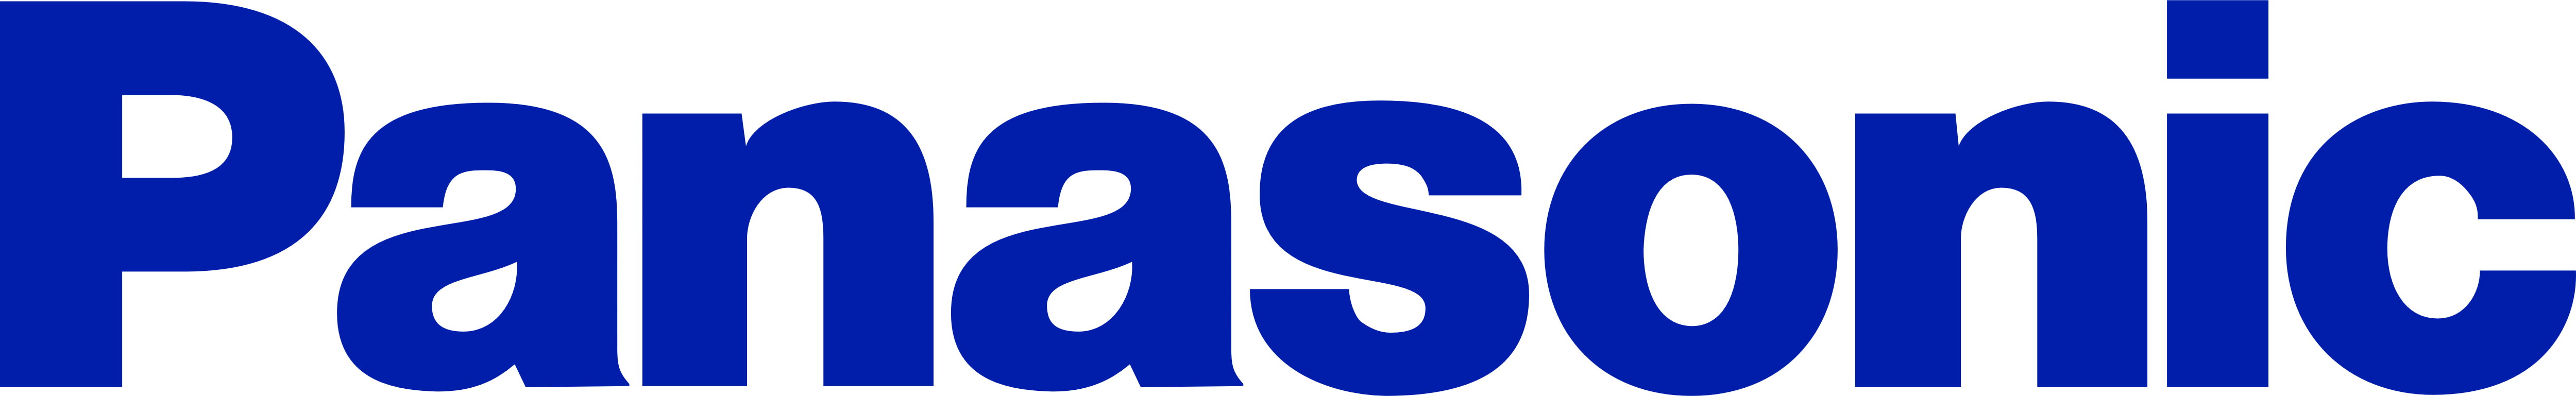 Producent logo